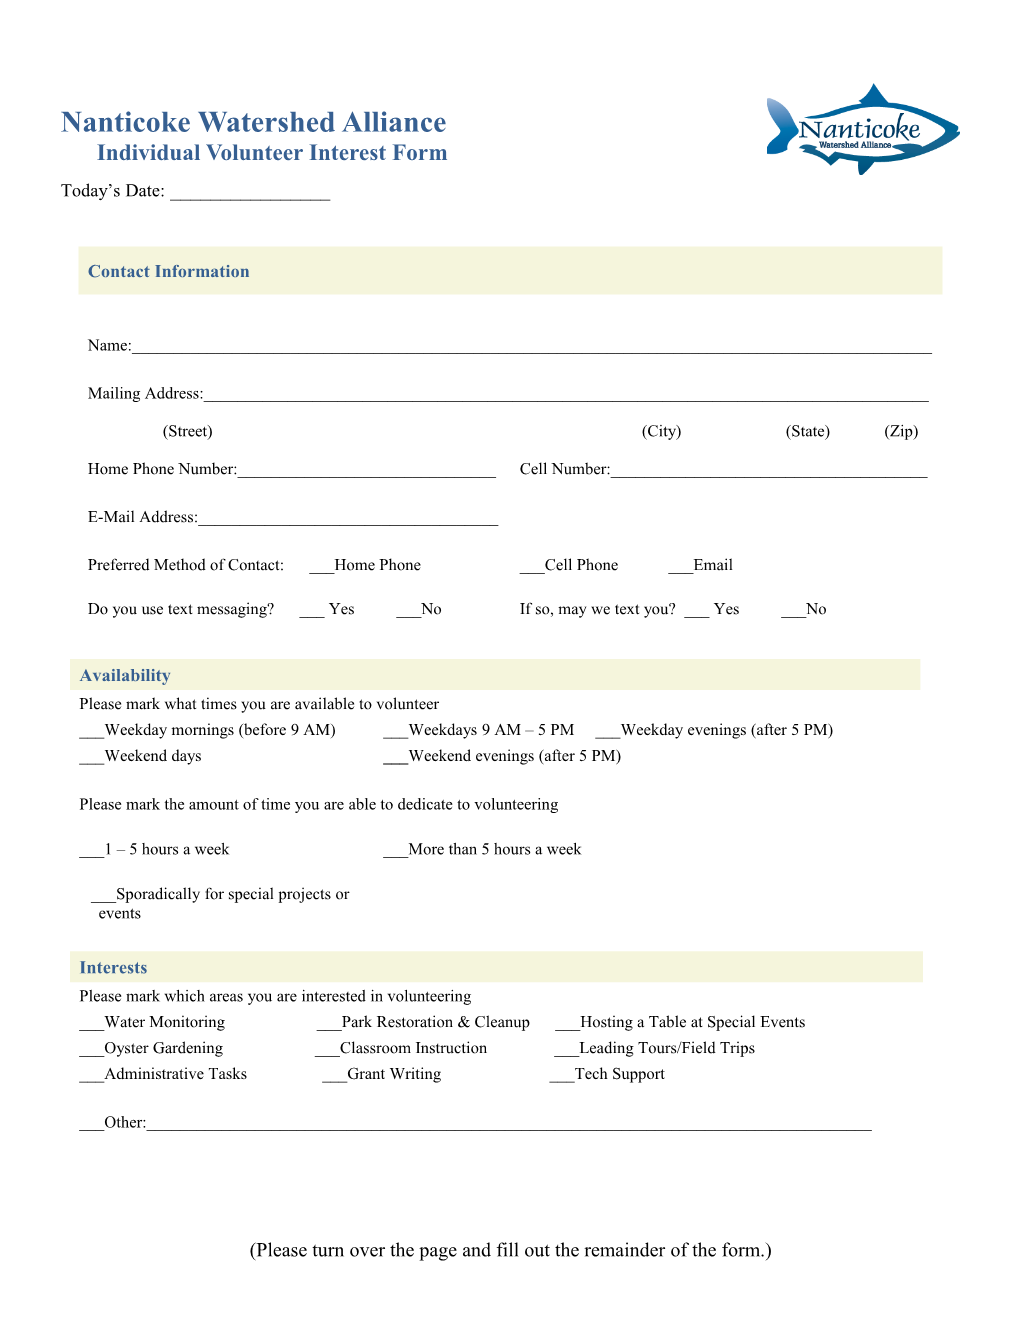 Nanticoke Watershed Allianceindividual Volunteer Interest Form